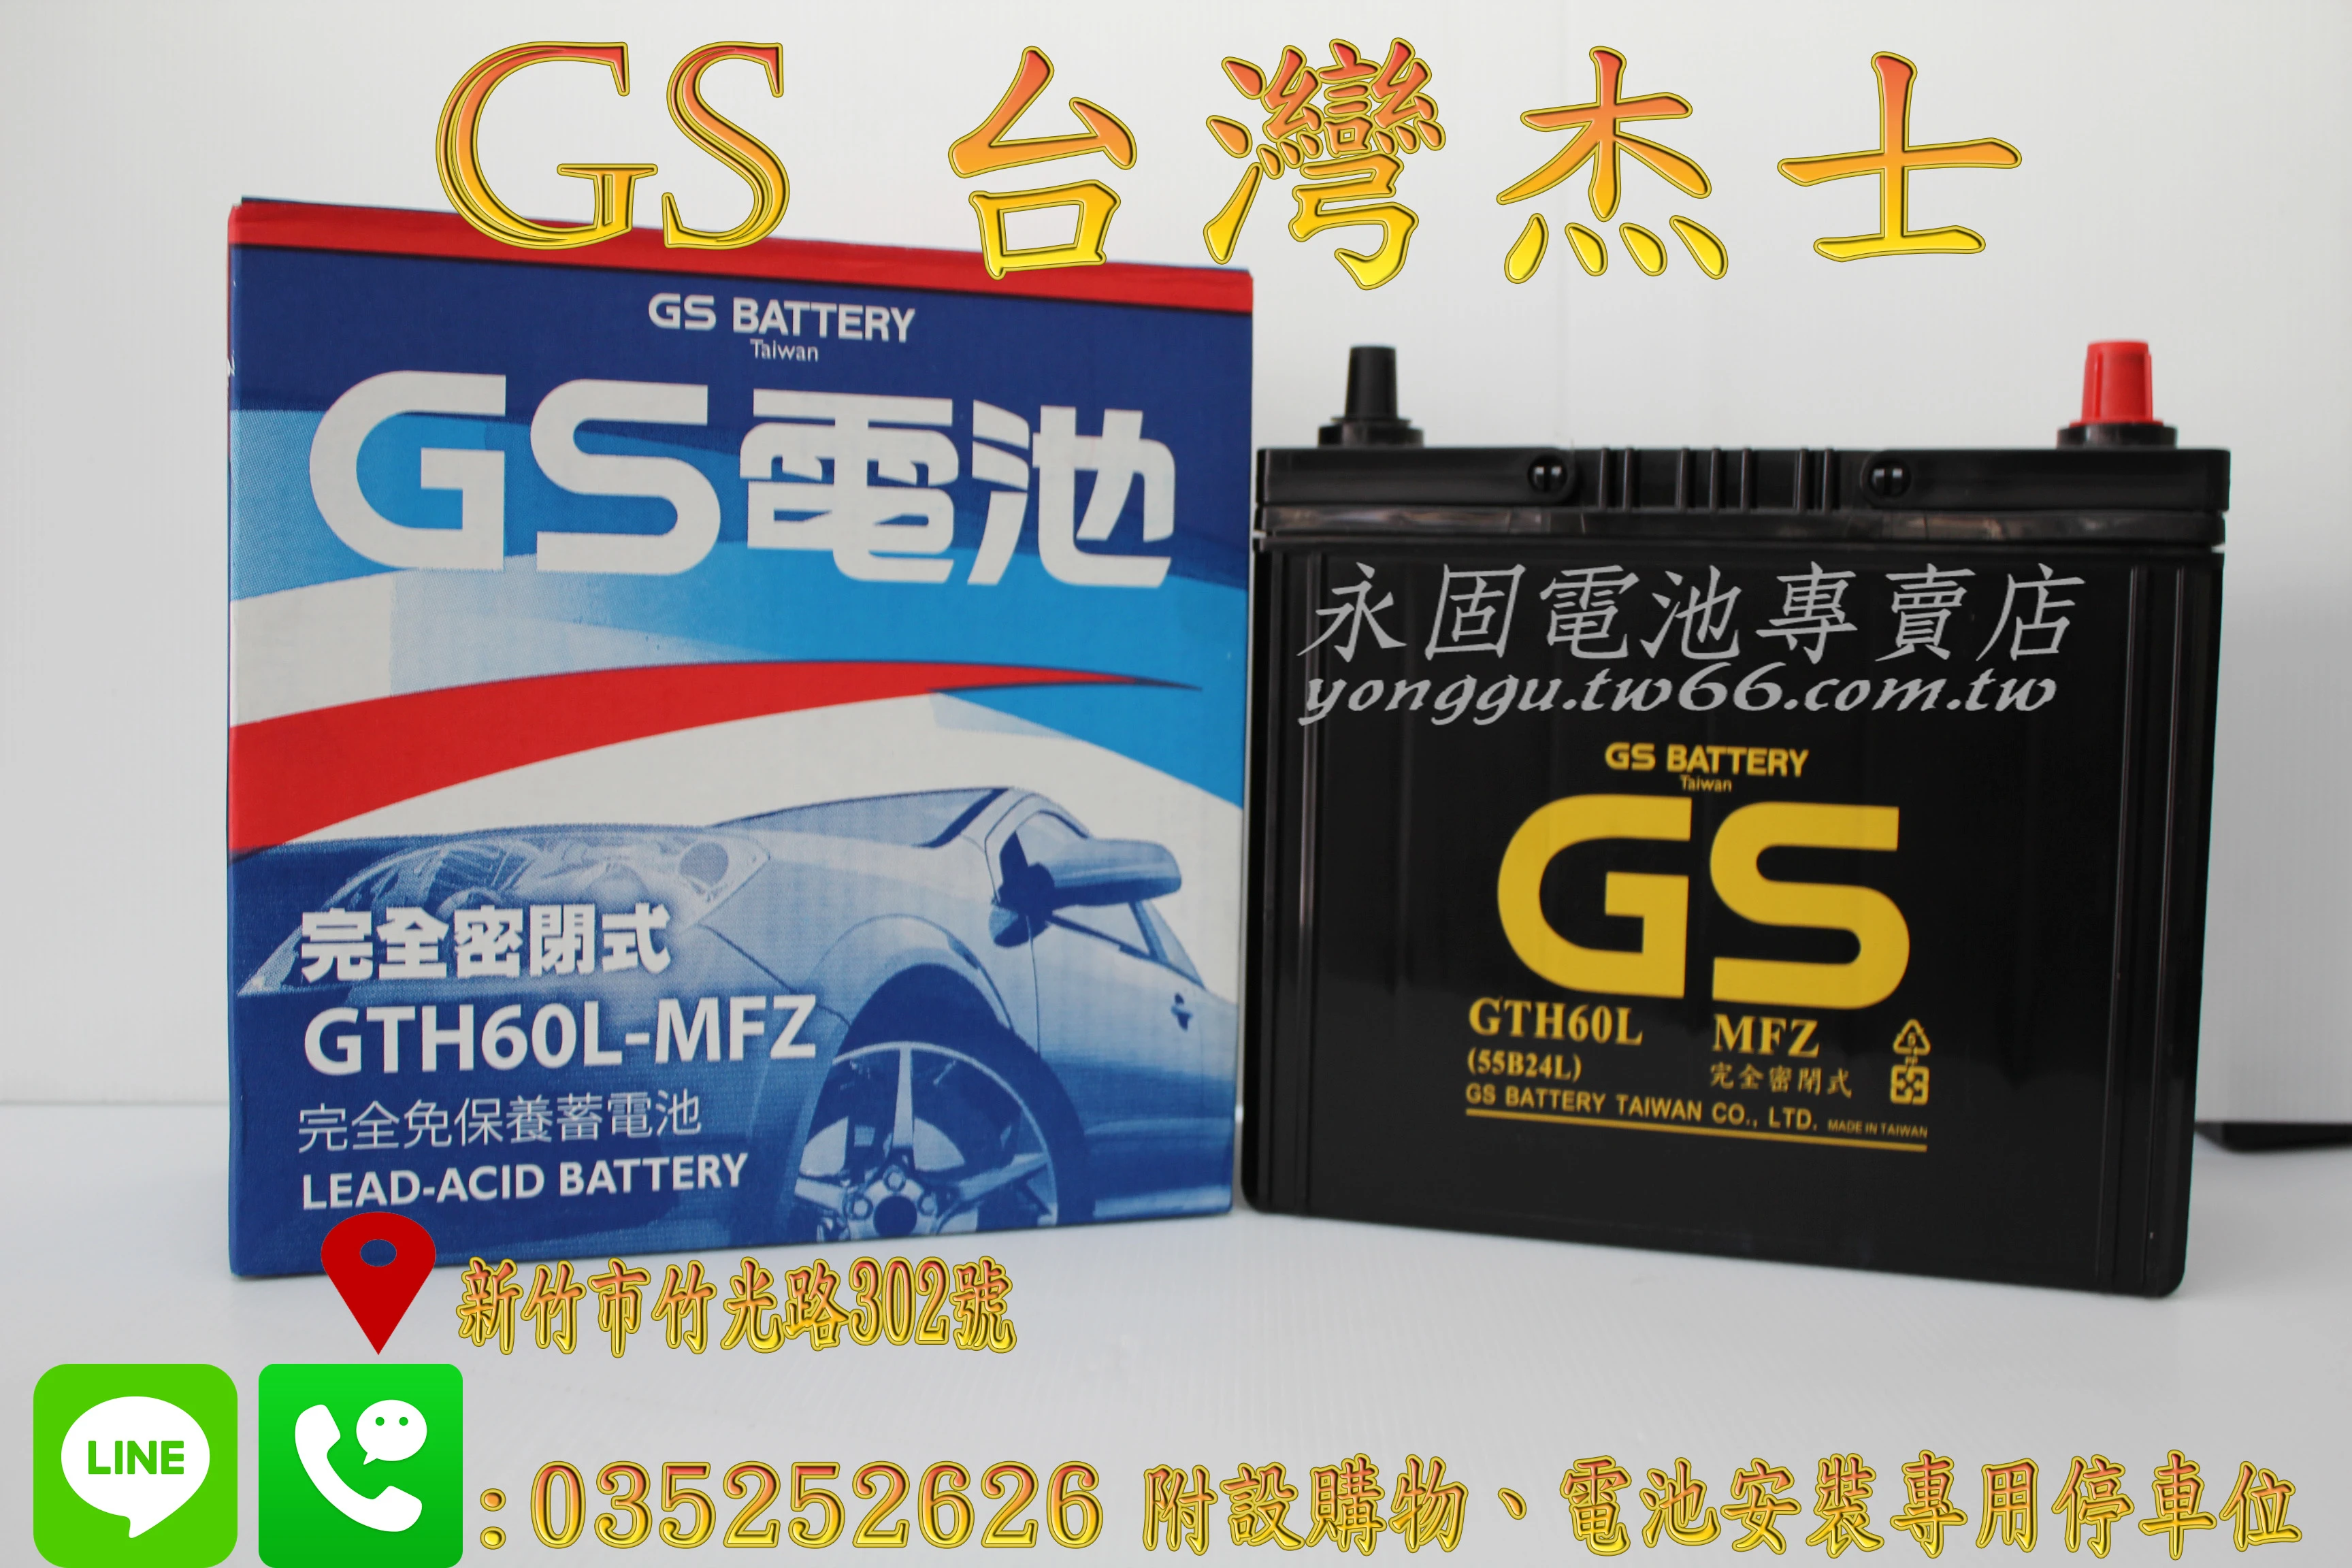 GS 統力 55B24L 國產 新竹汽車電池 免保養 46B24L 新竹永固電池專賣店